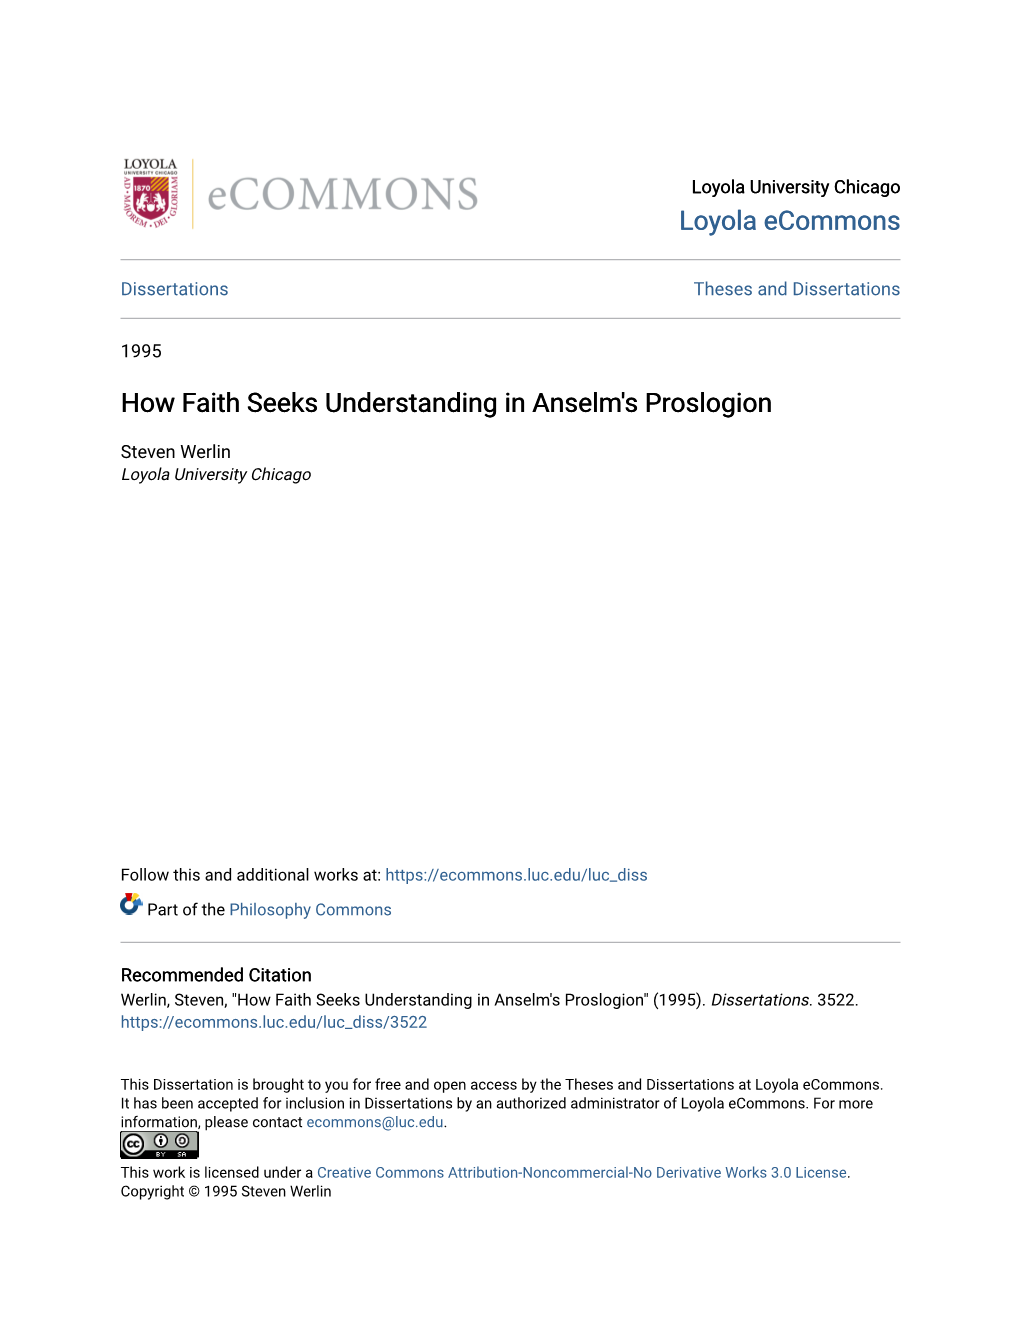 How Faith Seeks Understanding in Anselm's Proslogion